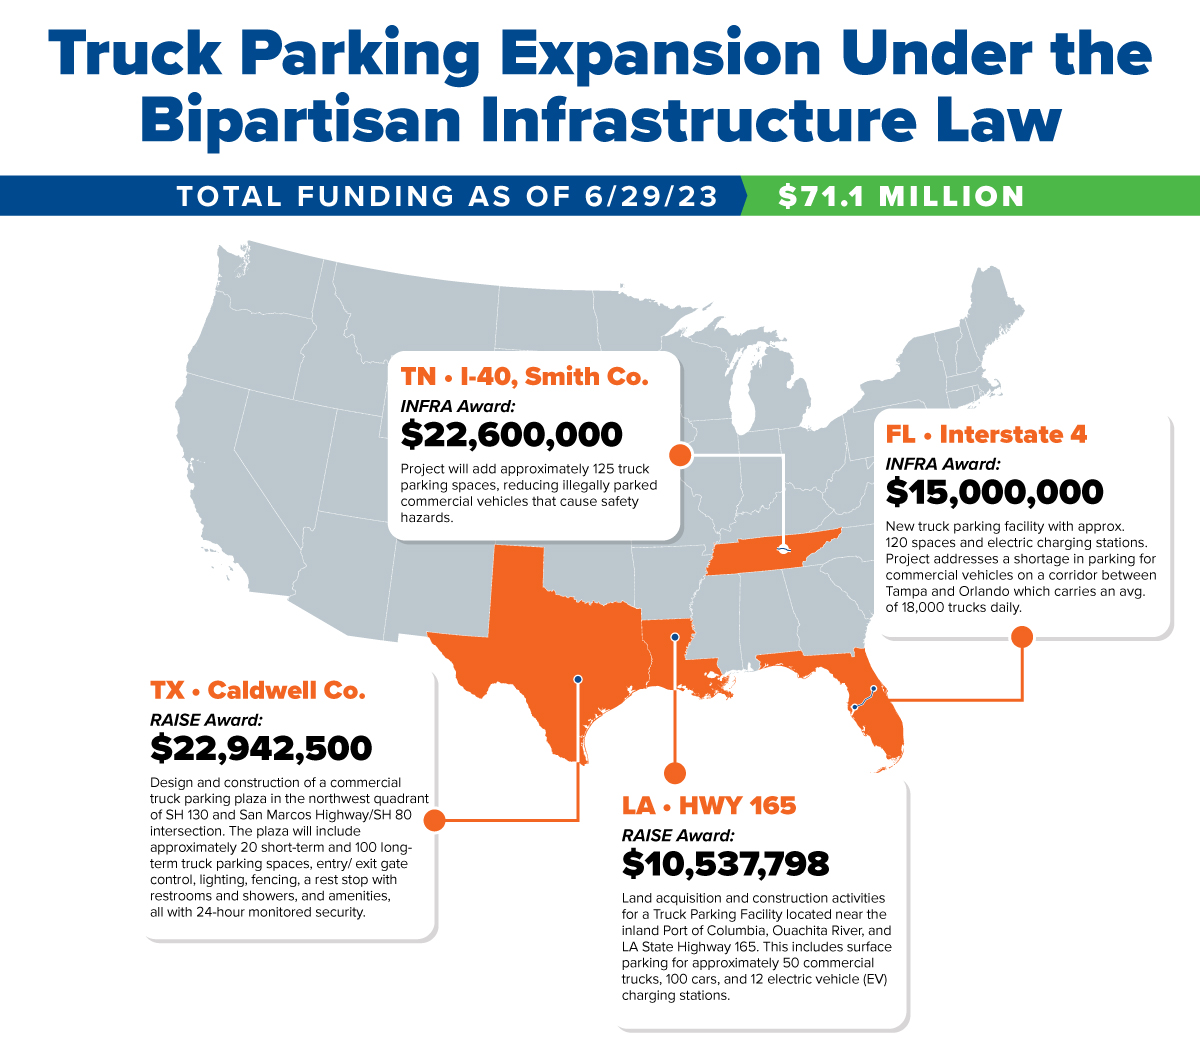 Truck parking grants